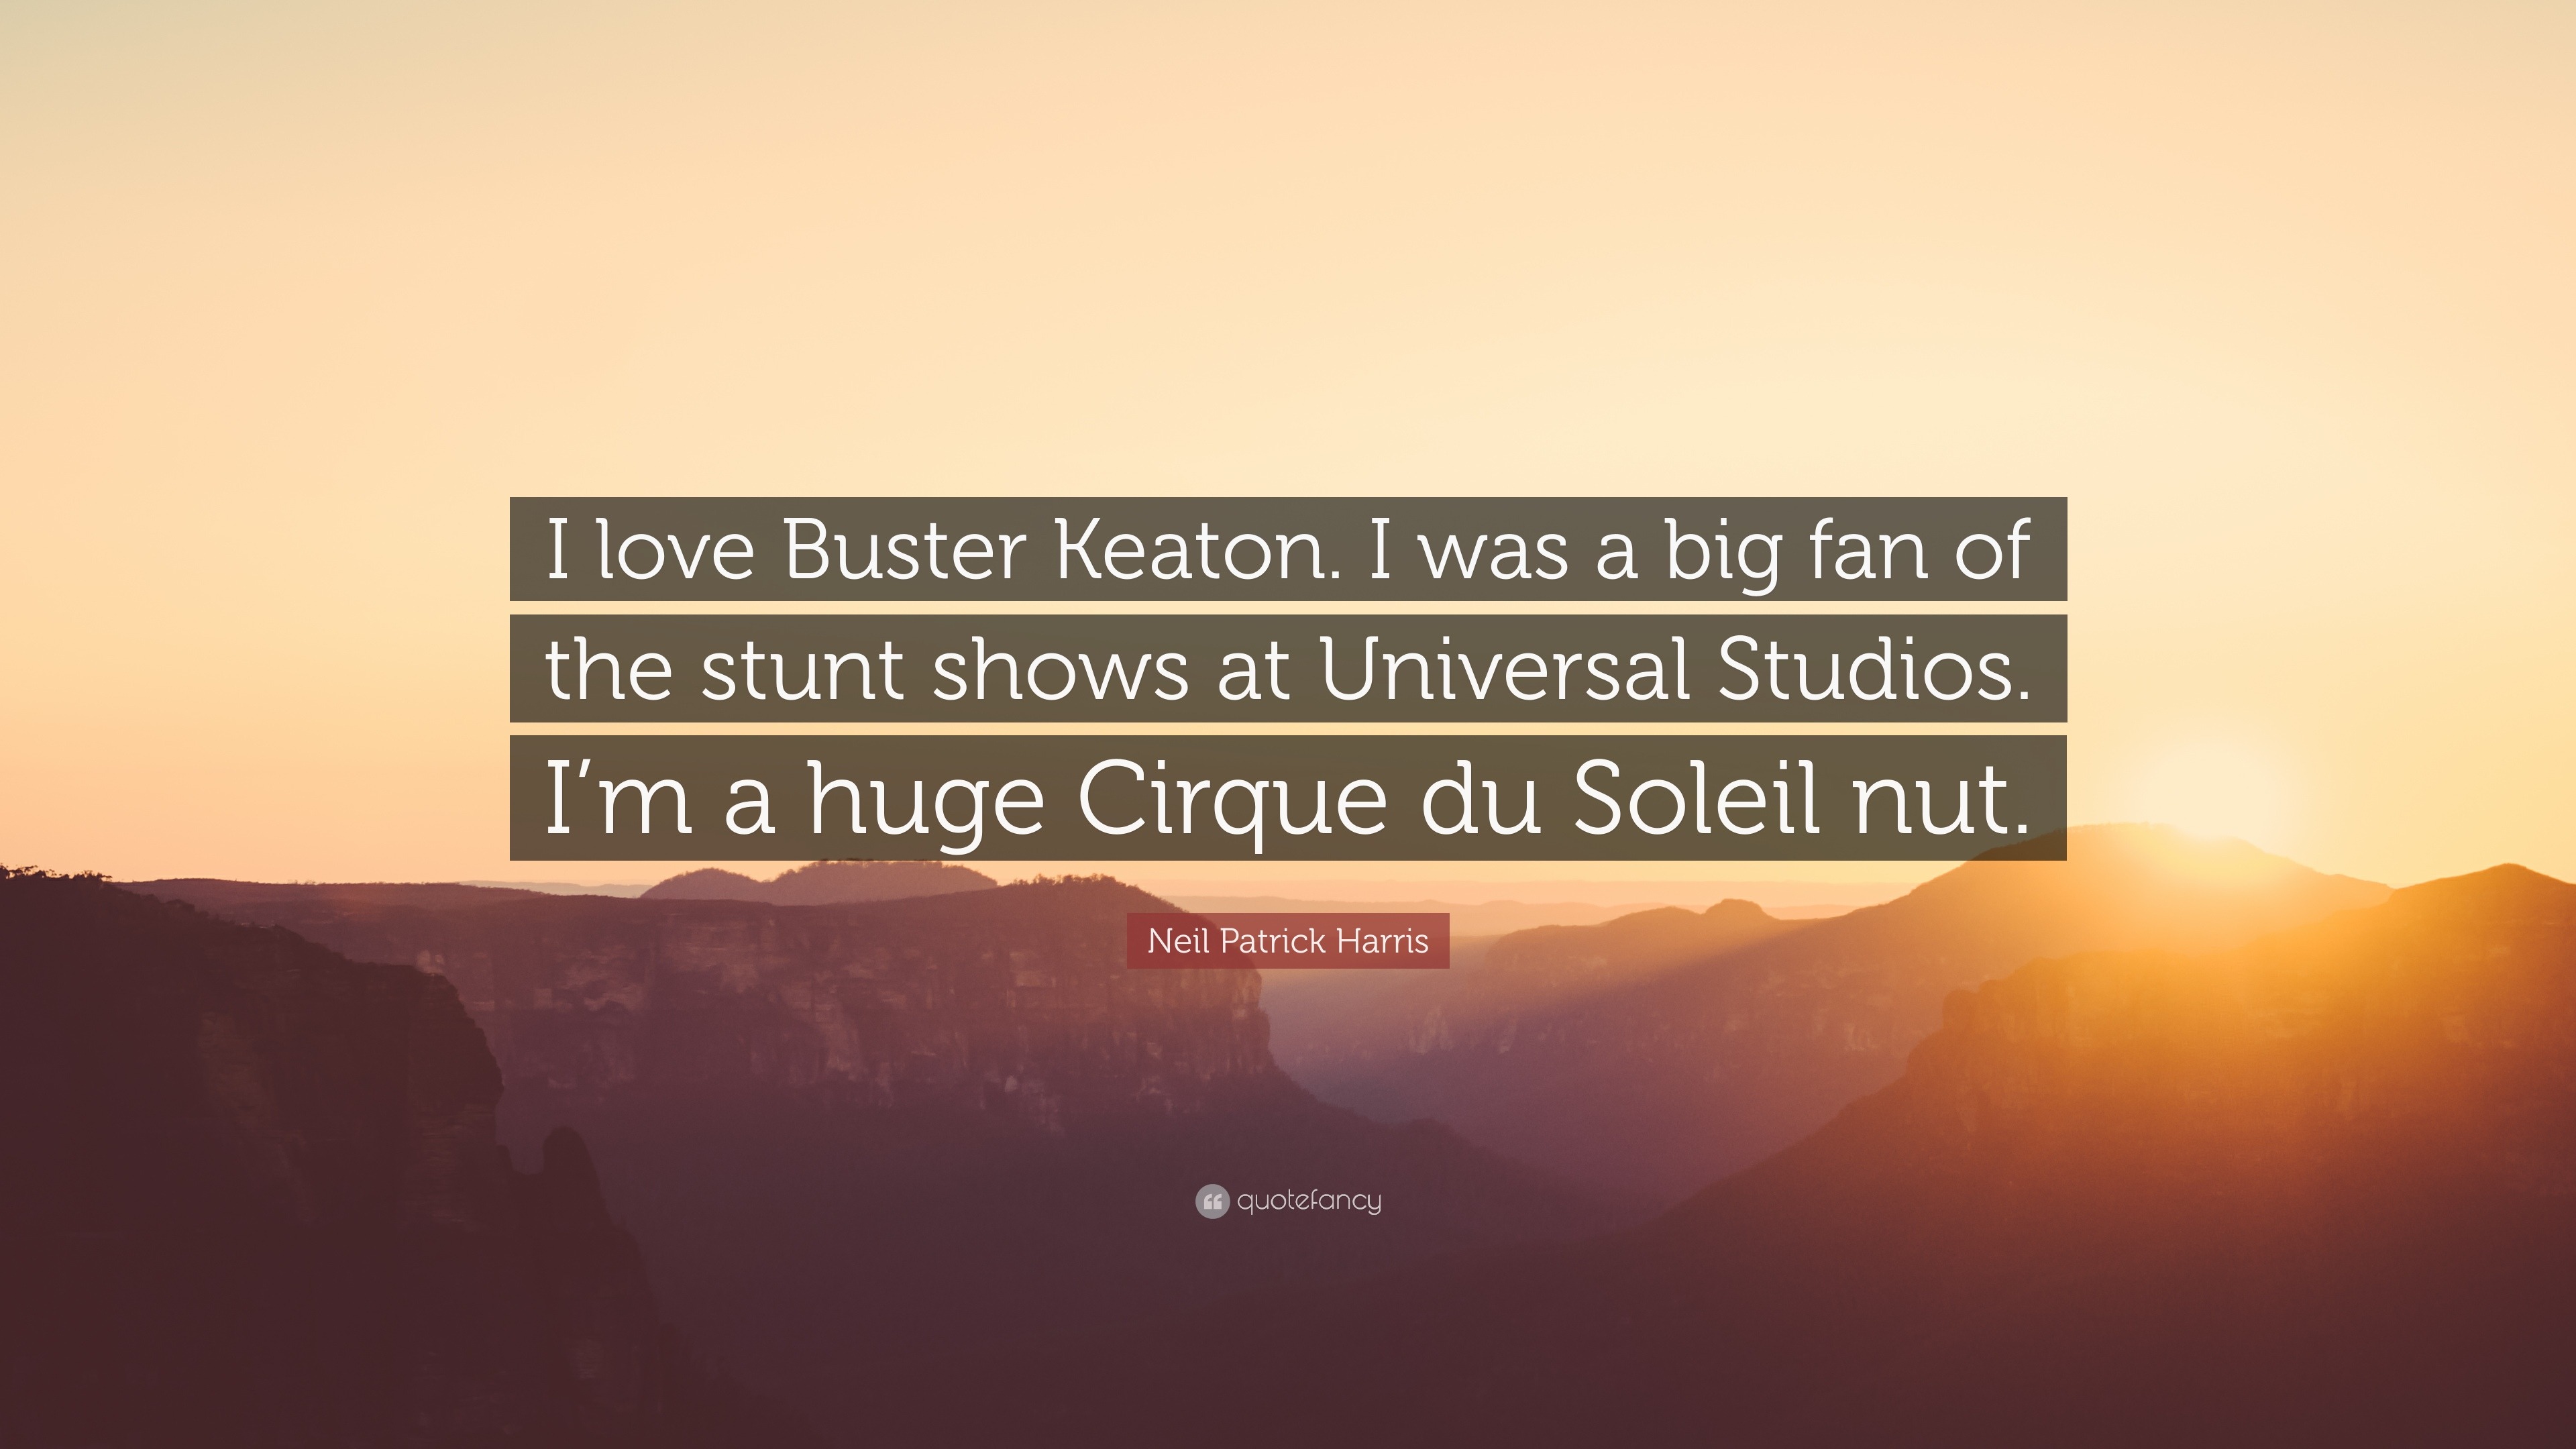 Buster Keaton - #SaturdayCaptions #KeatonCon special!